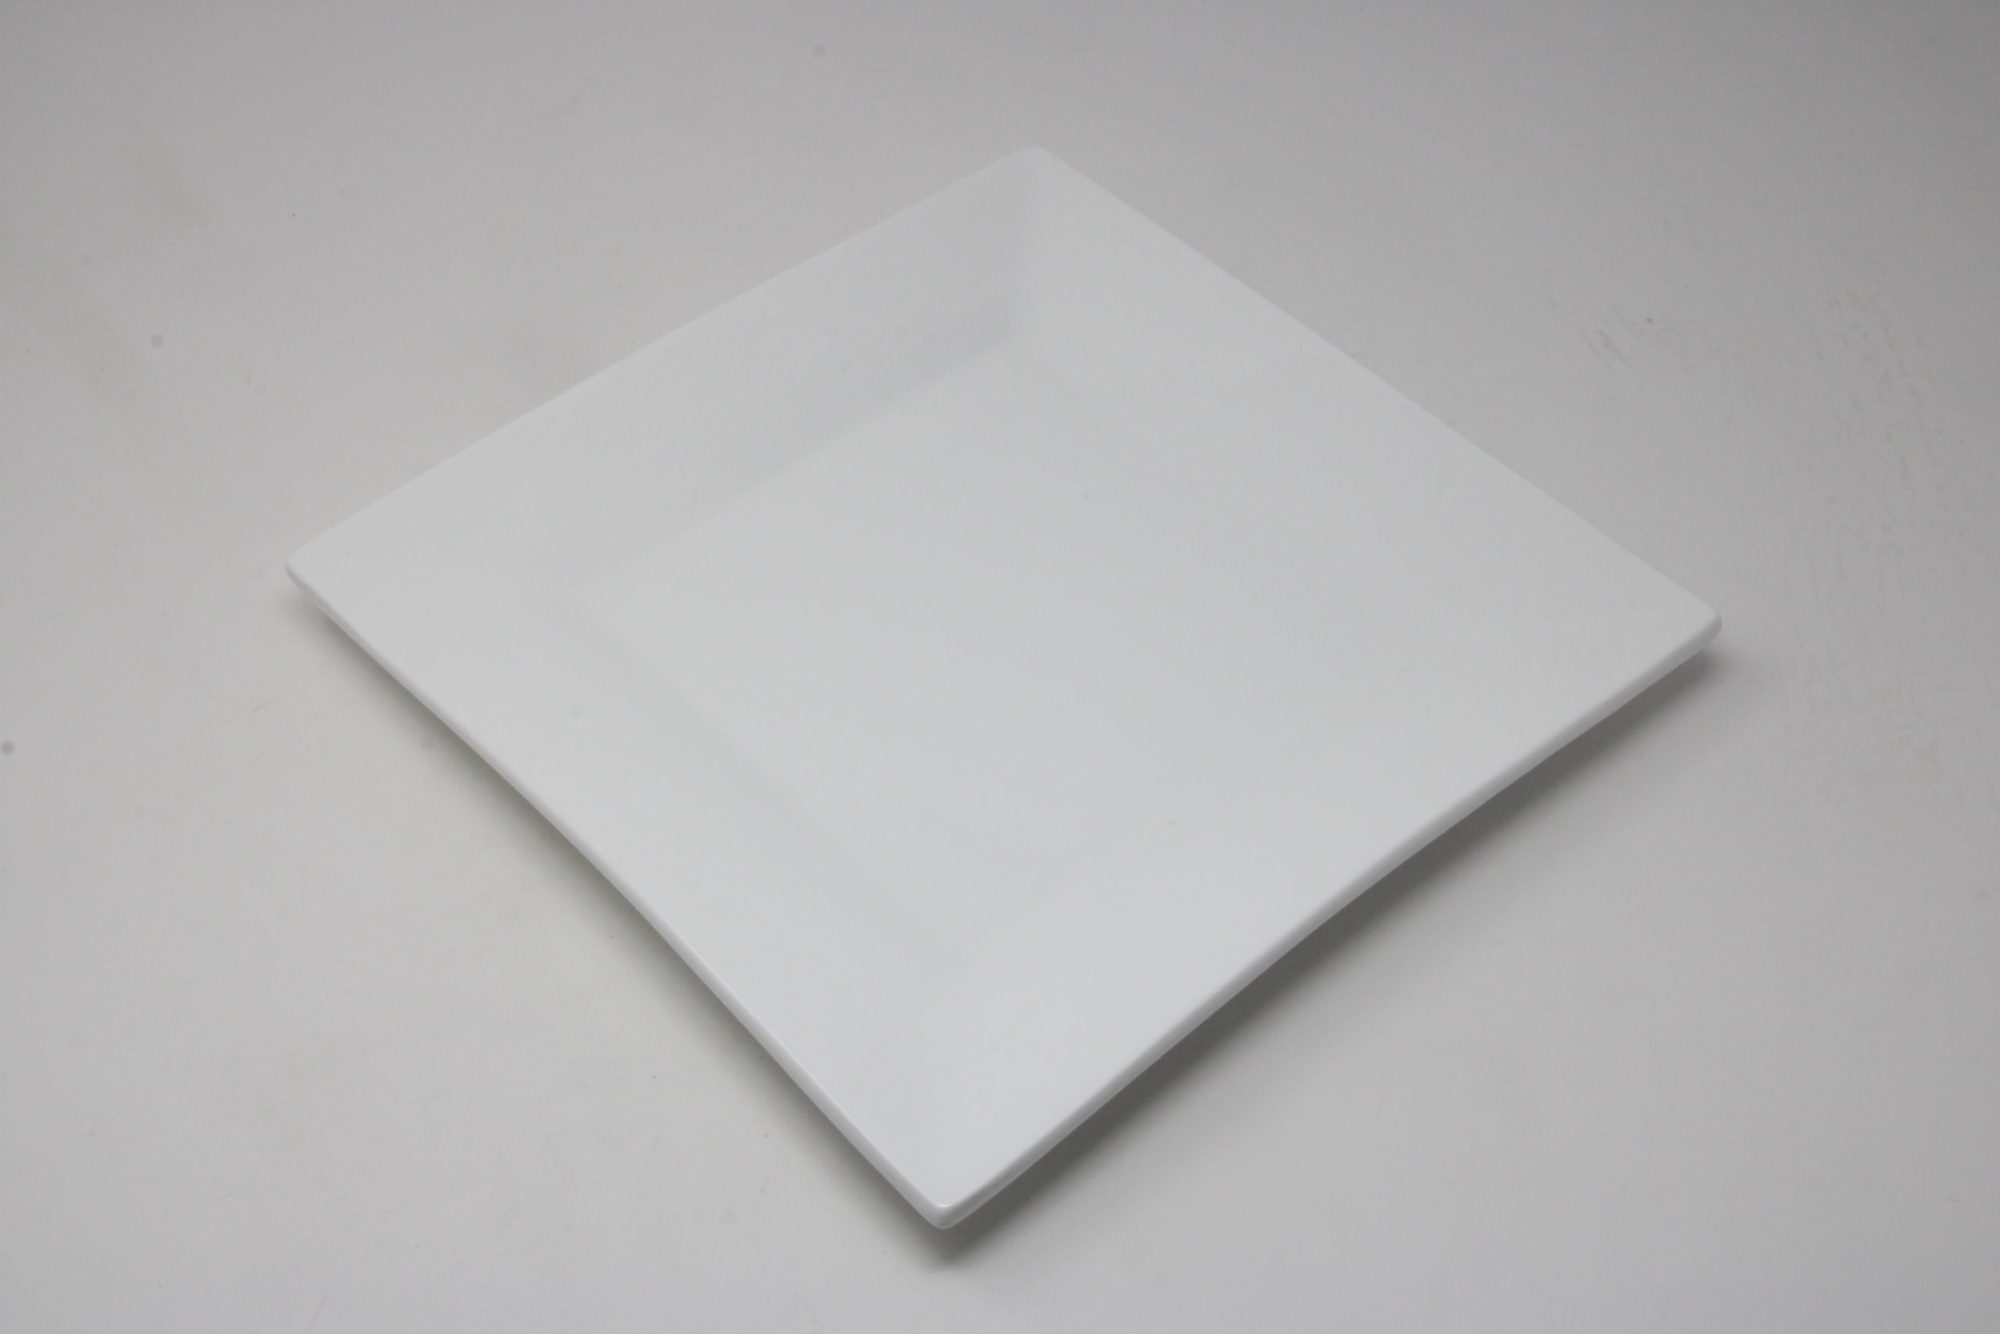 Cermaic Square Plate 9" - 2991